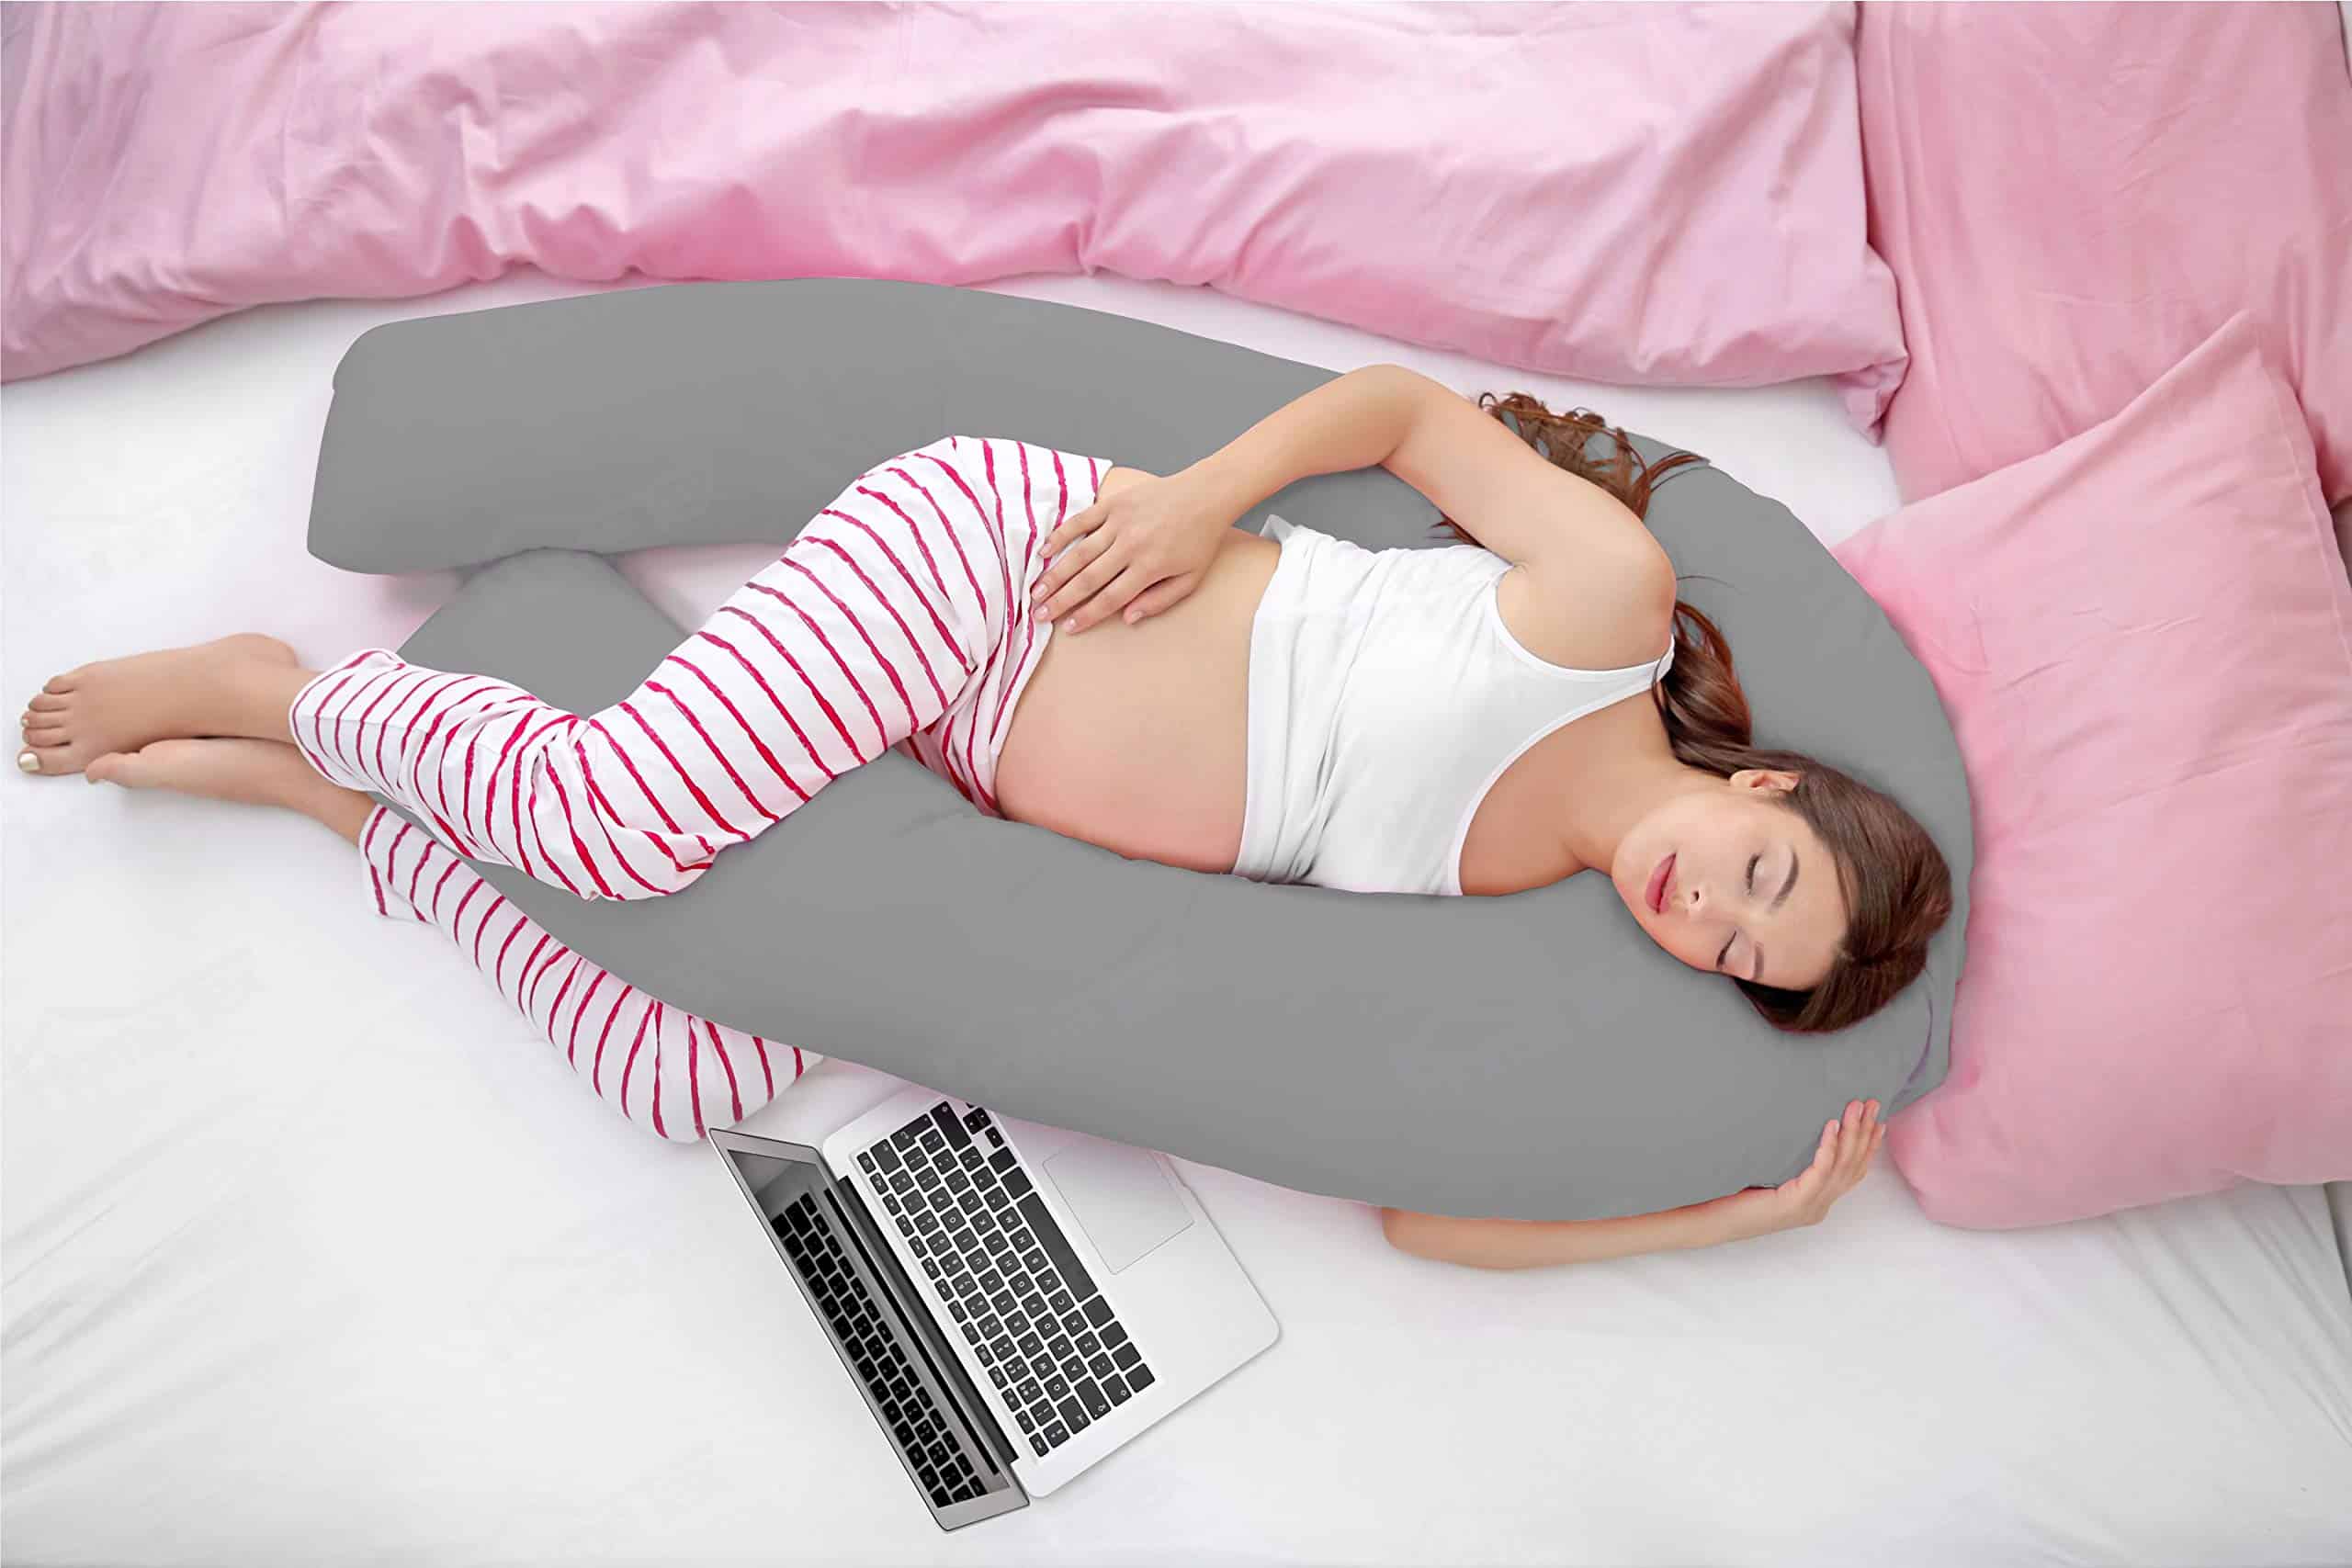 Hometex 9ft U Shaped Pregnancy Support Pillow